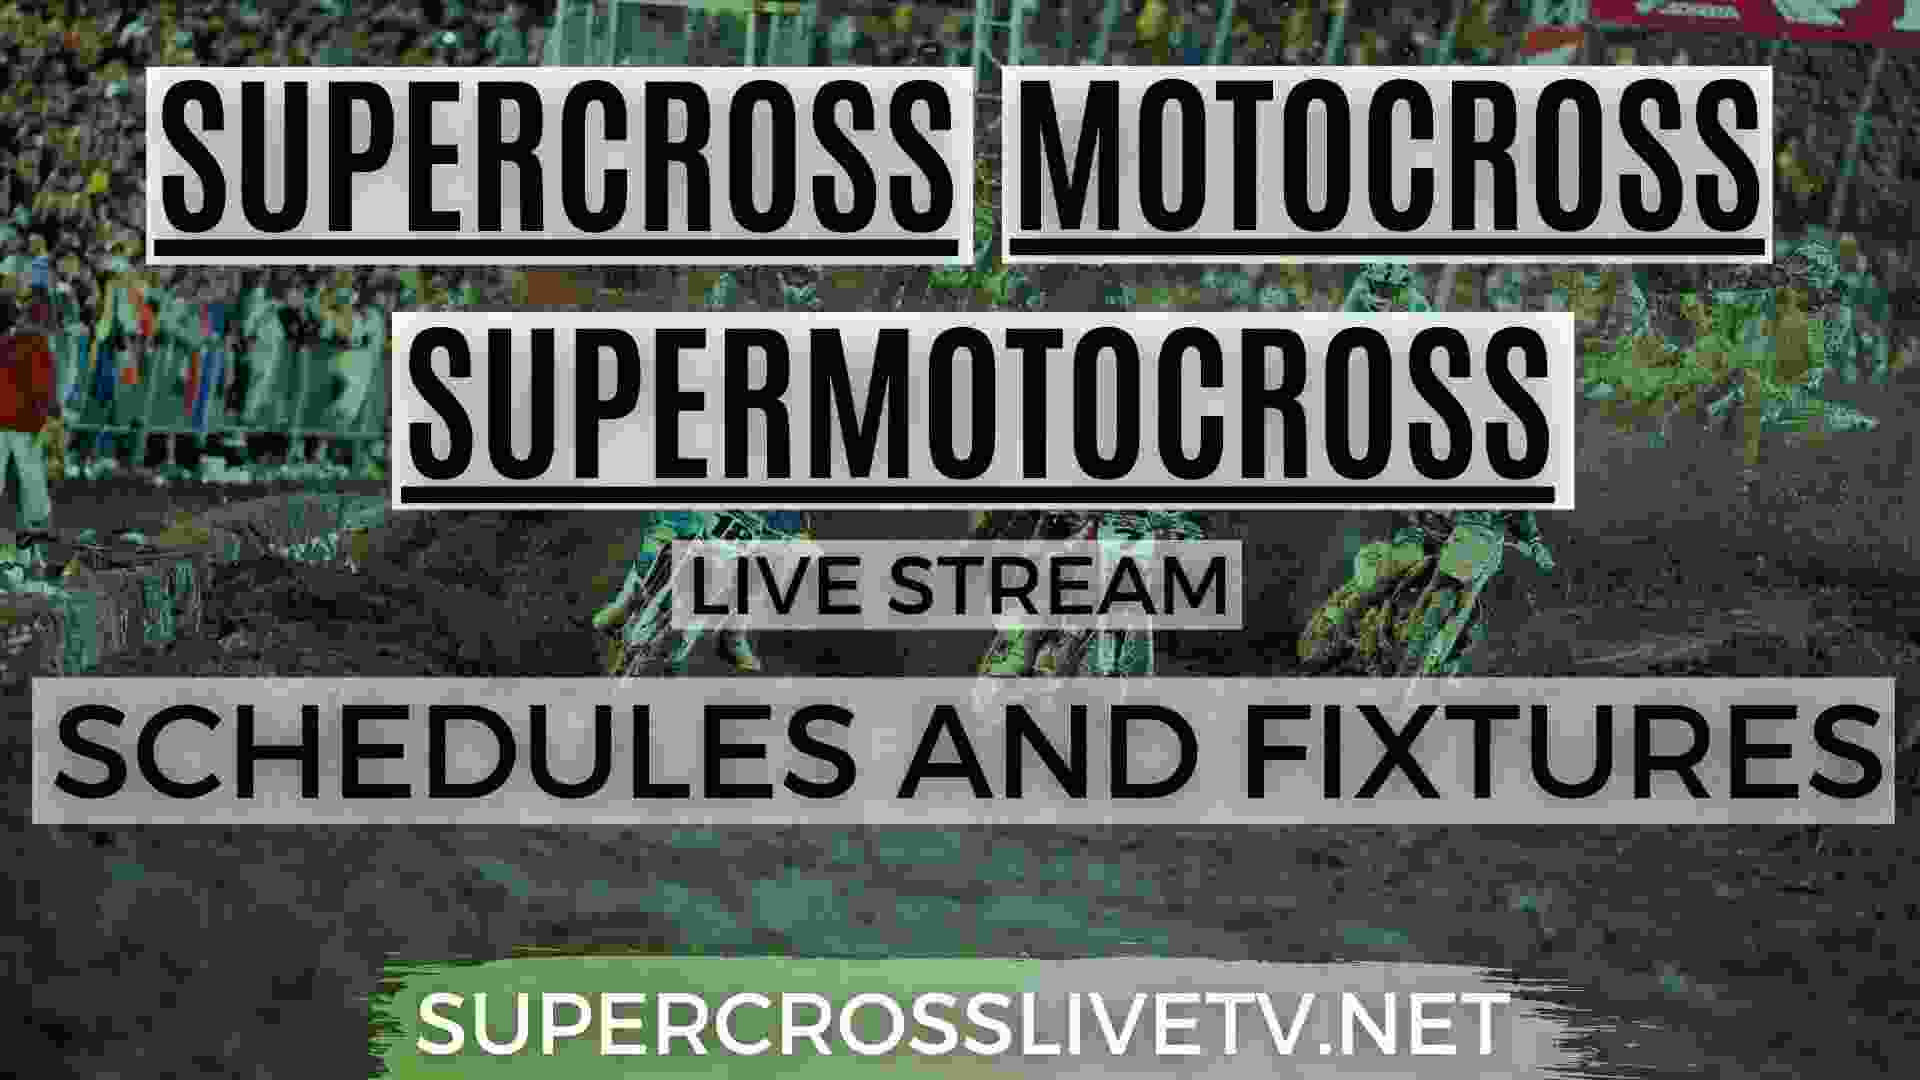 AMA Monster Energy Supercross Schedule And Fixtures